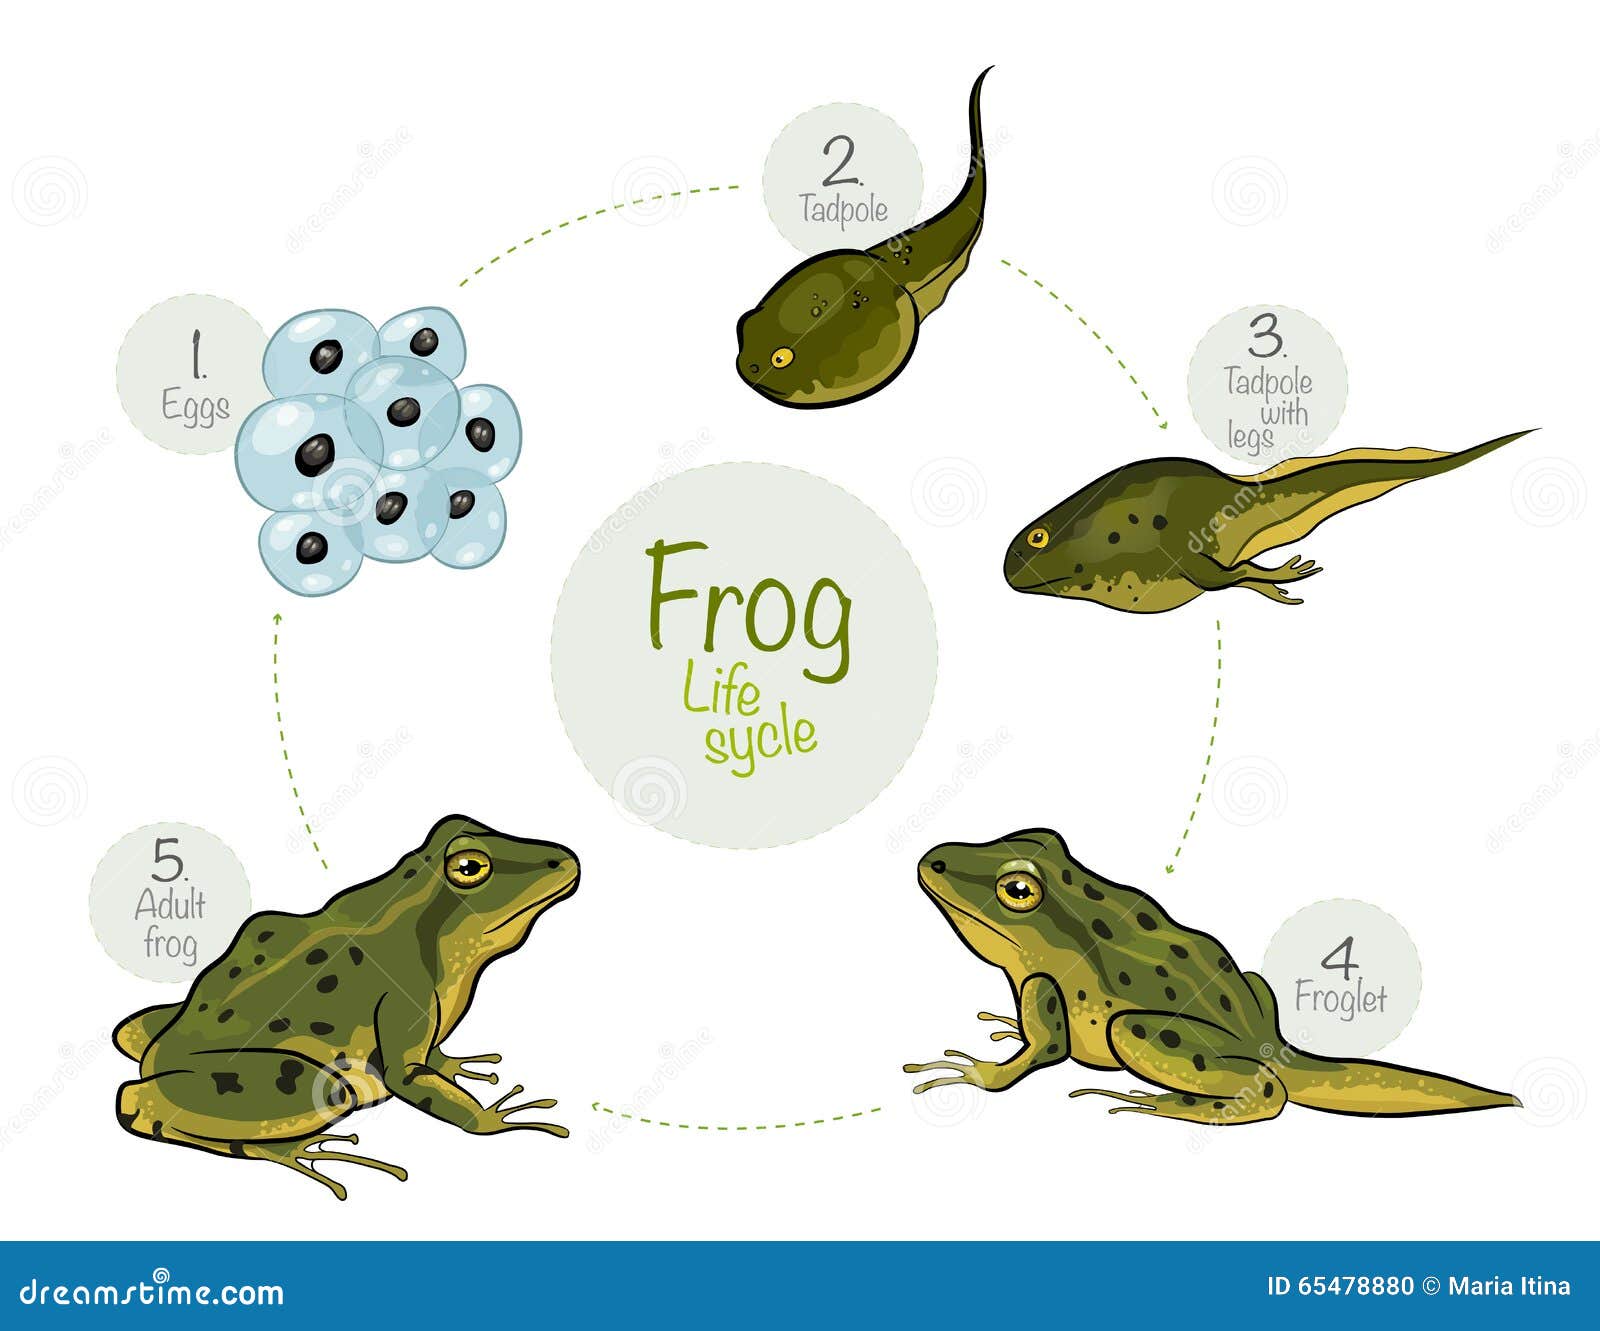 https://thumbs.dreamstime.com/z/life-cycle-frog-vector-illustration-65478880.jpg